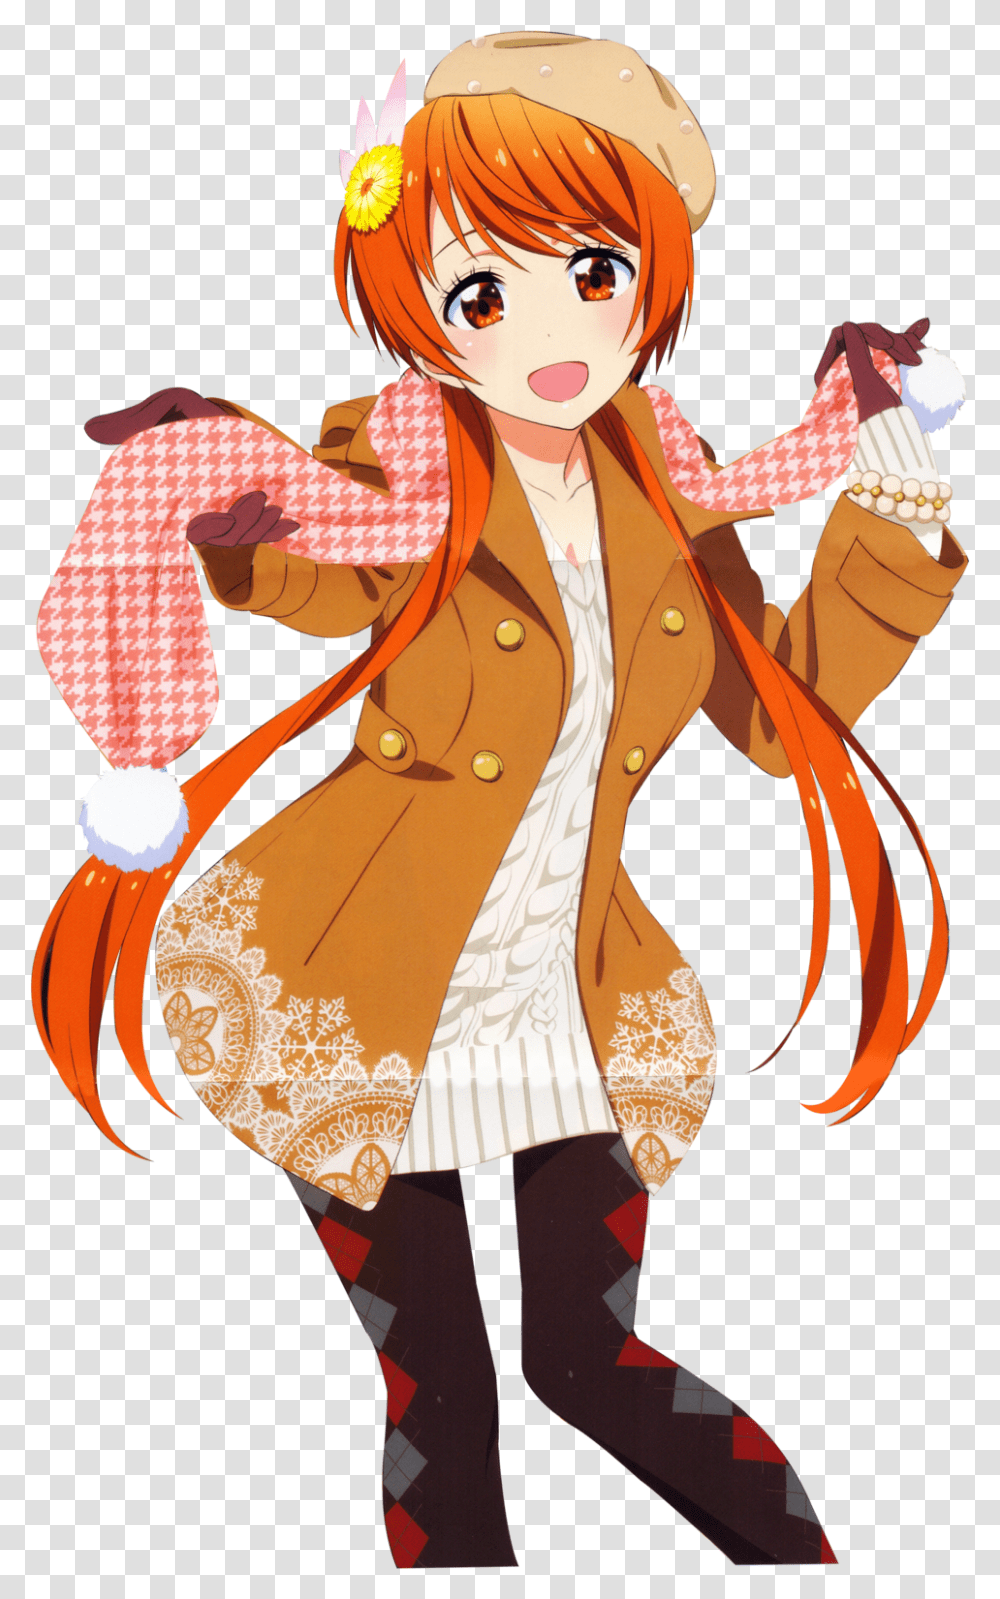 Nisekoi Nisekoi2 Chitoge Chitogekirisaki Rakuichijou Orange Haired Anime Girl, Person, Manga, Comics Transparent Png